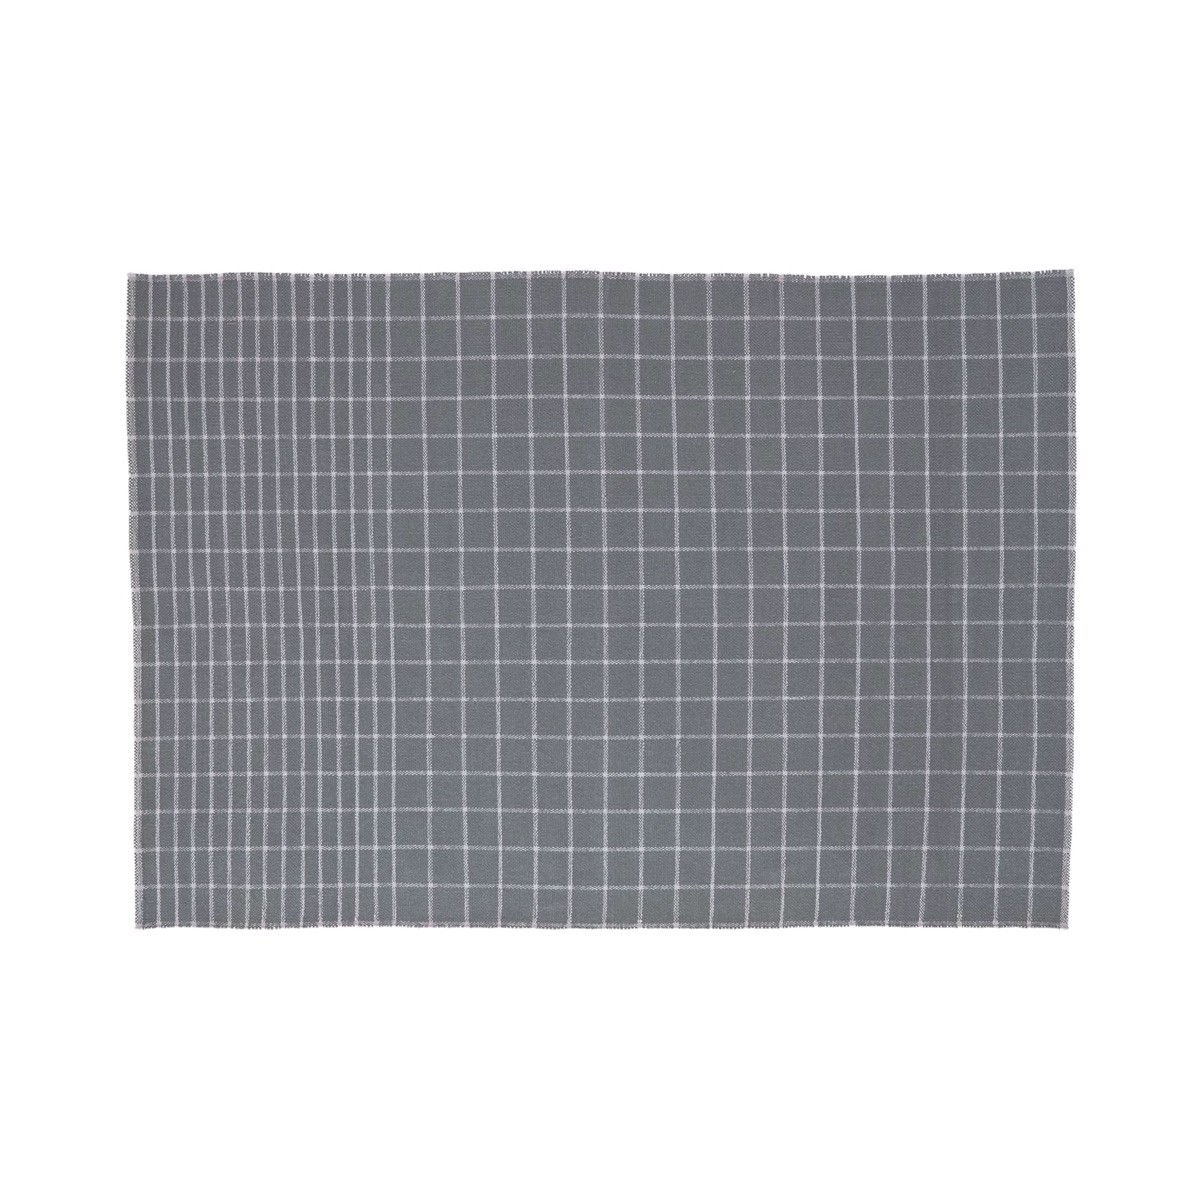 200x300cm - tapis Tiles 2